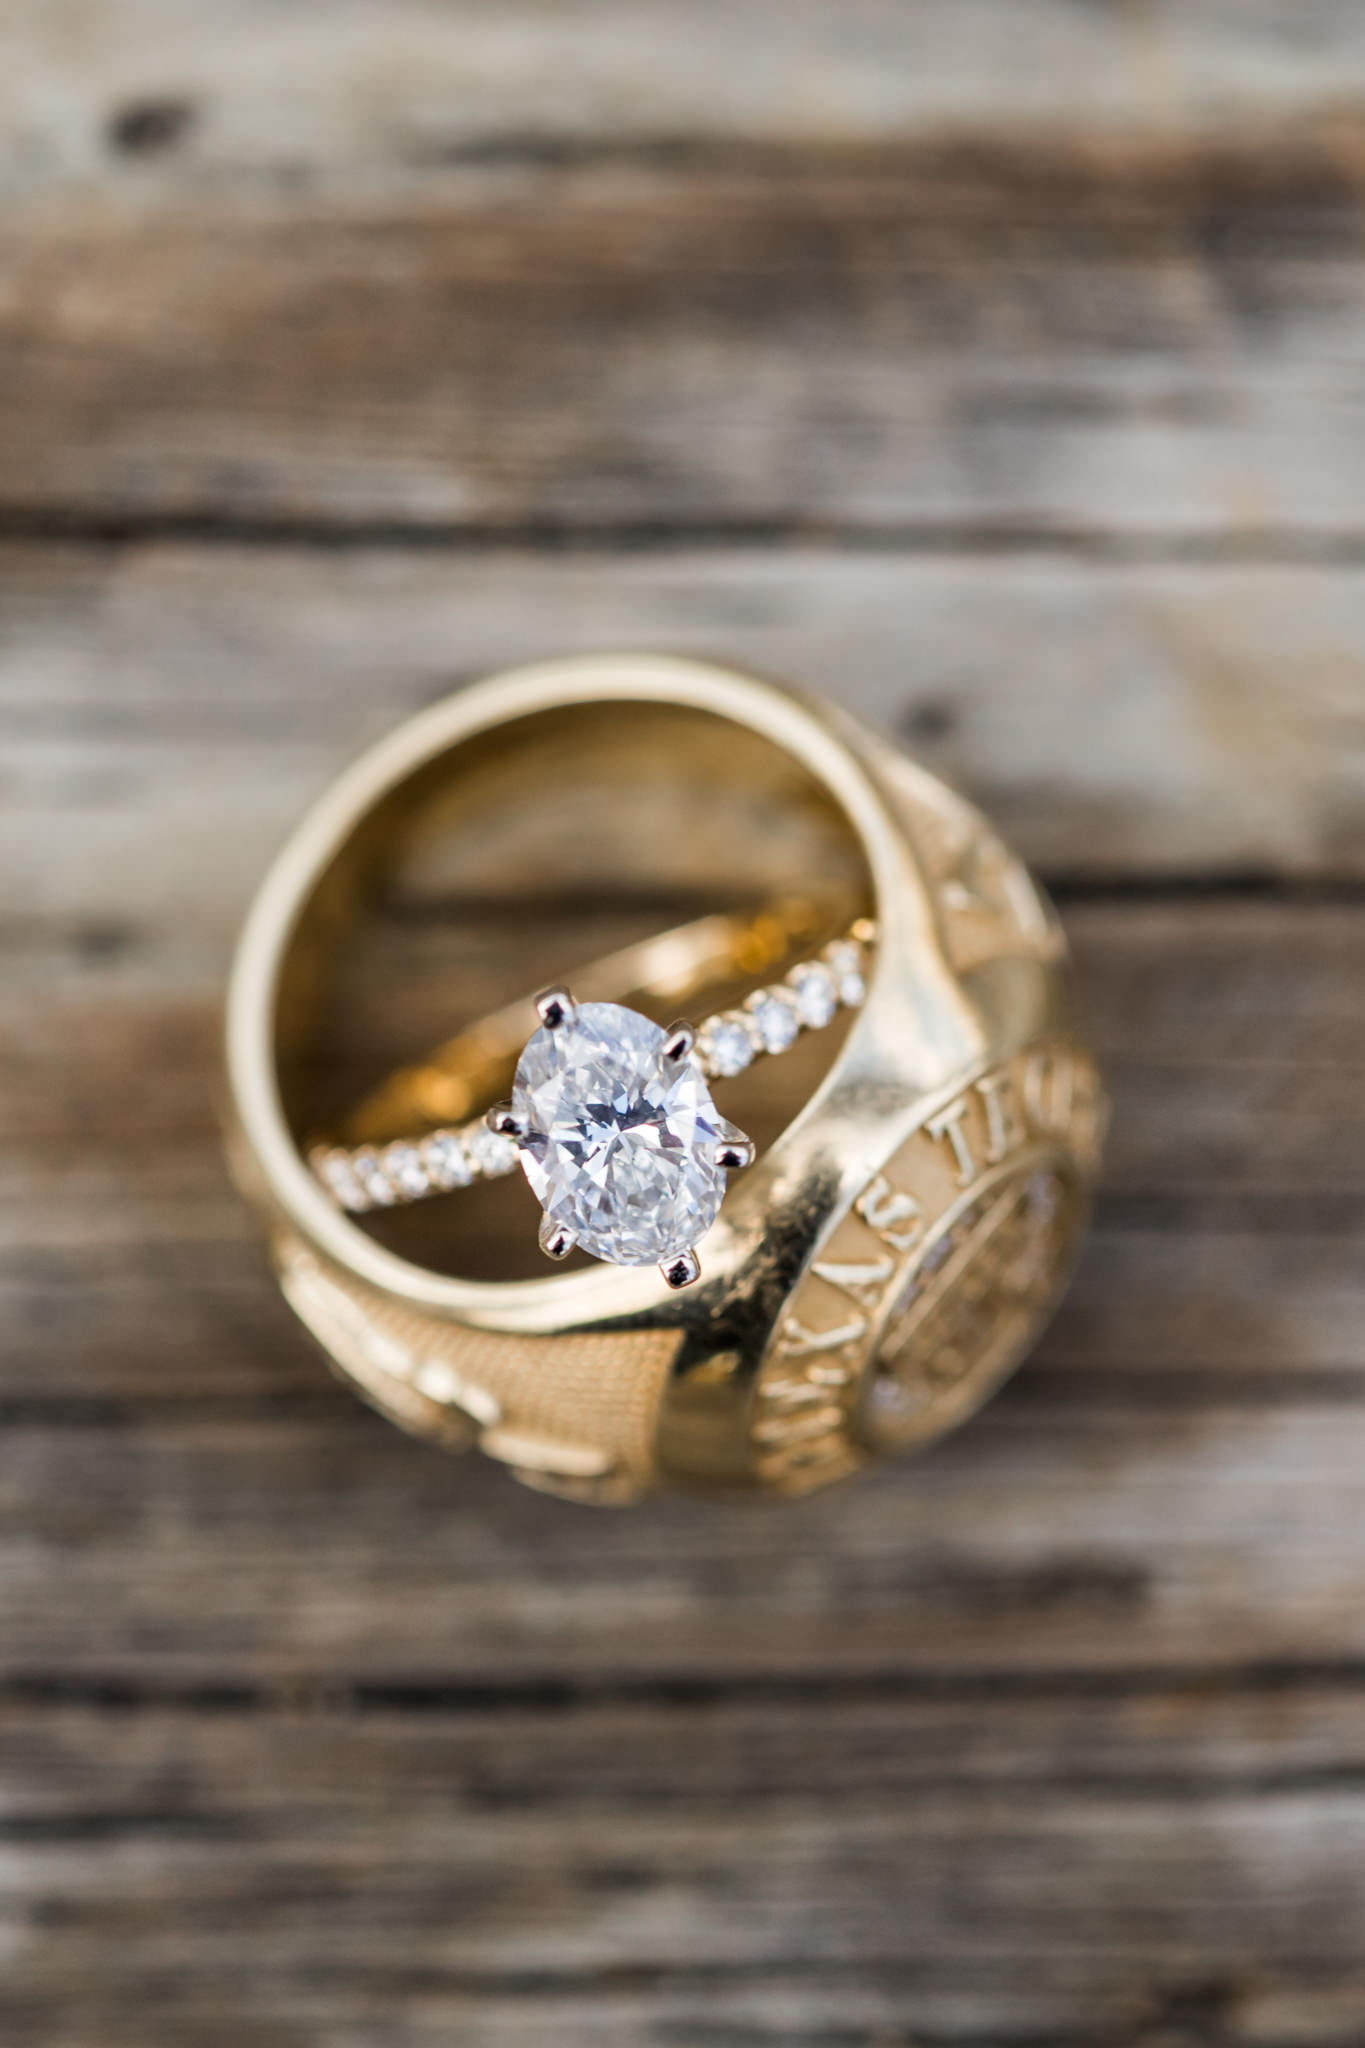 A Proposal at Cibolo Nature Center by Dawn Elizabeth Studios, San Antonio Wedding Photographer